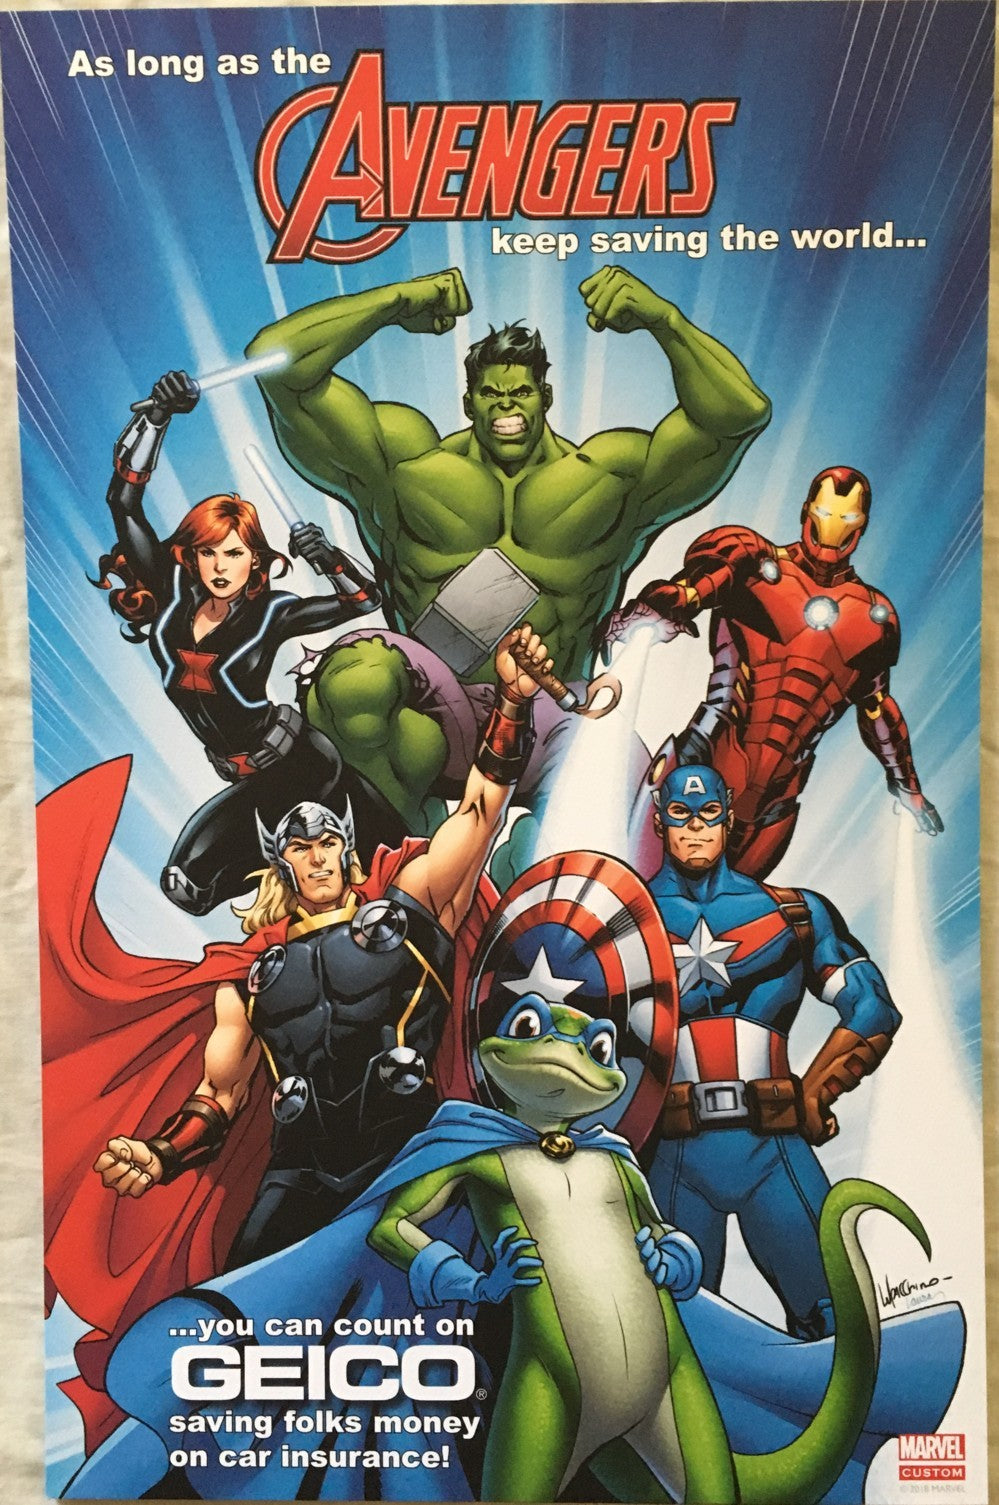 Avengers 2018 San Diego Comic-Con Geico 11x17 Marvel promo poster